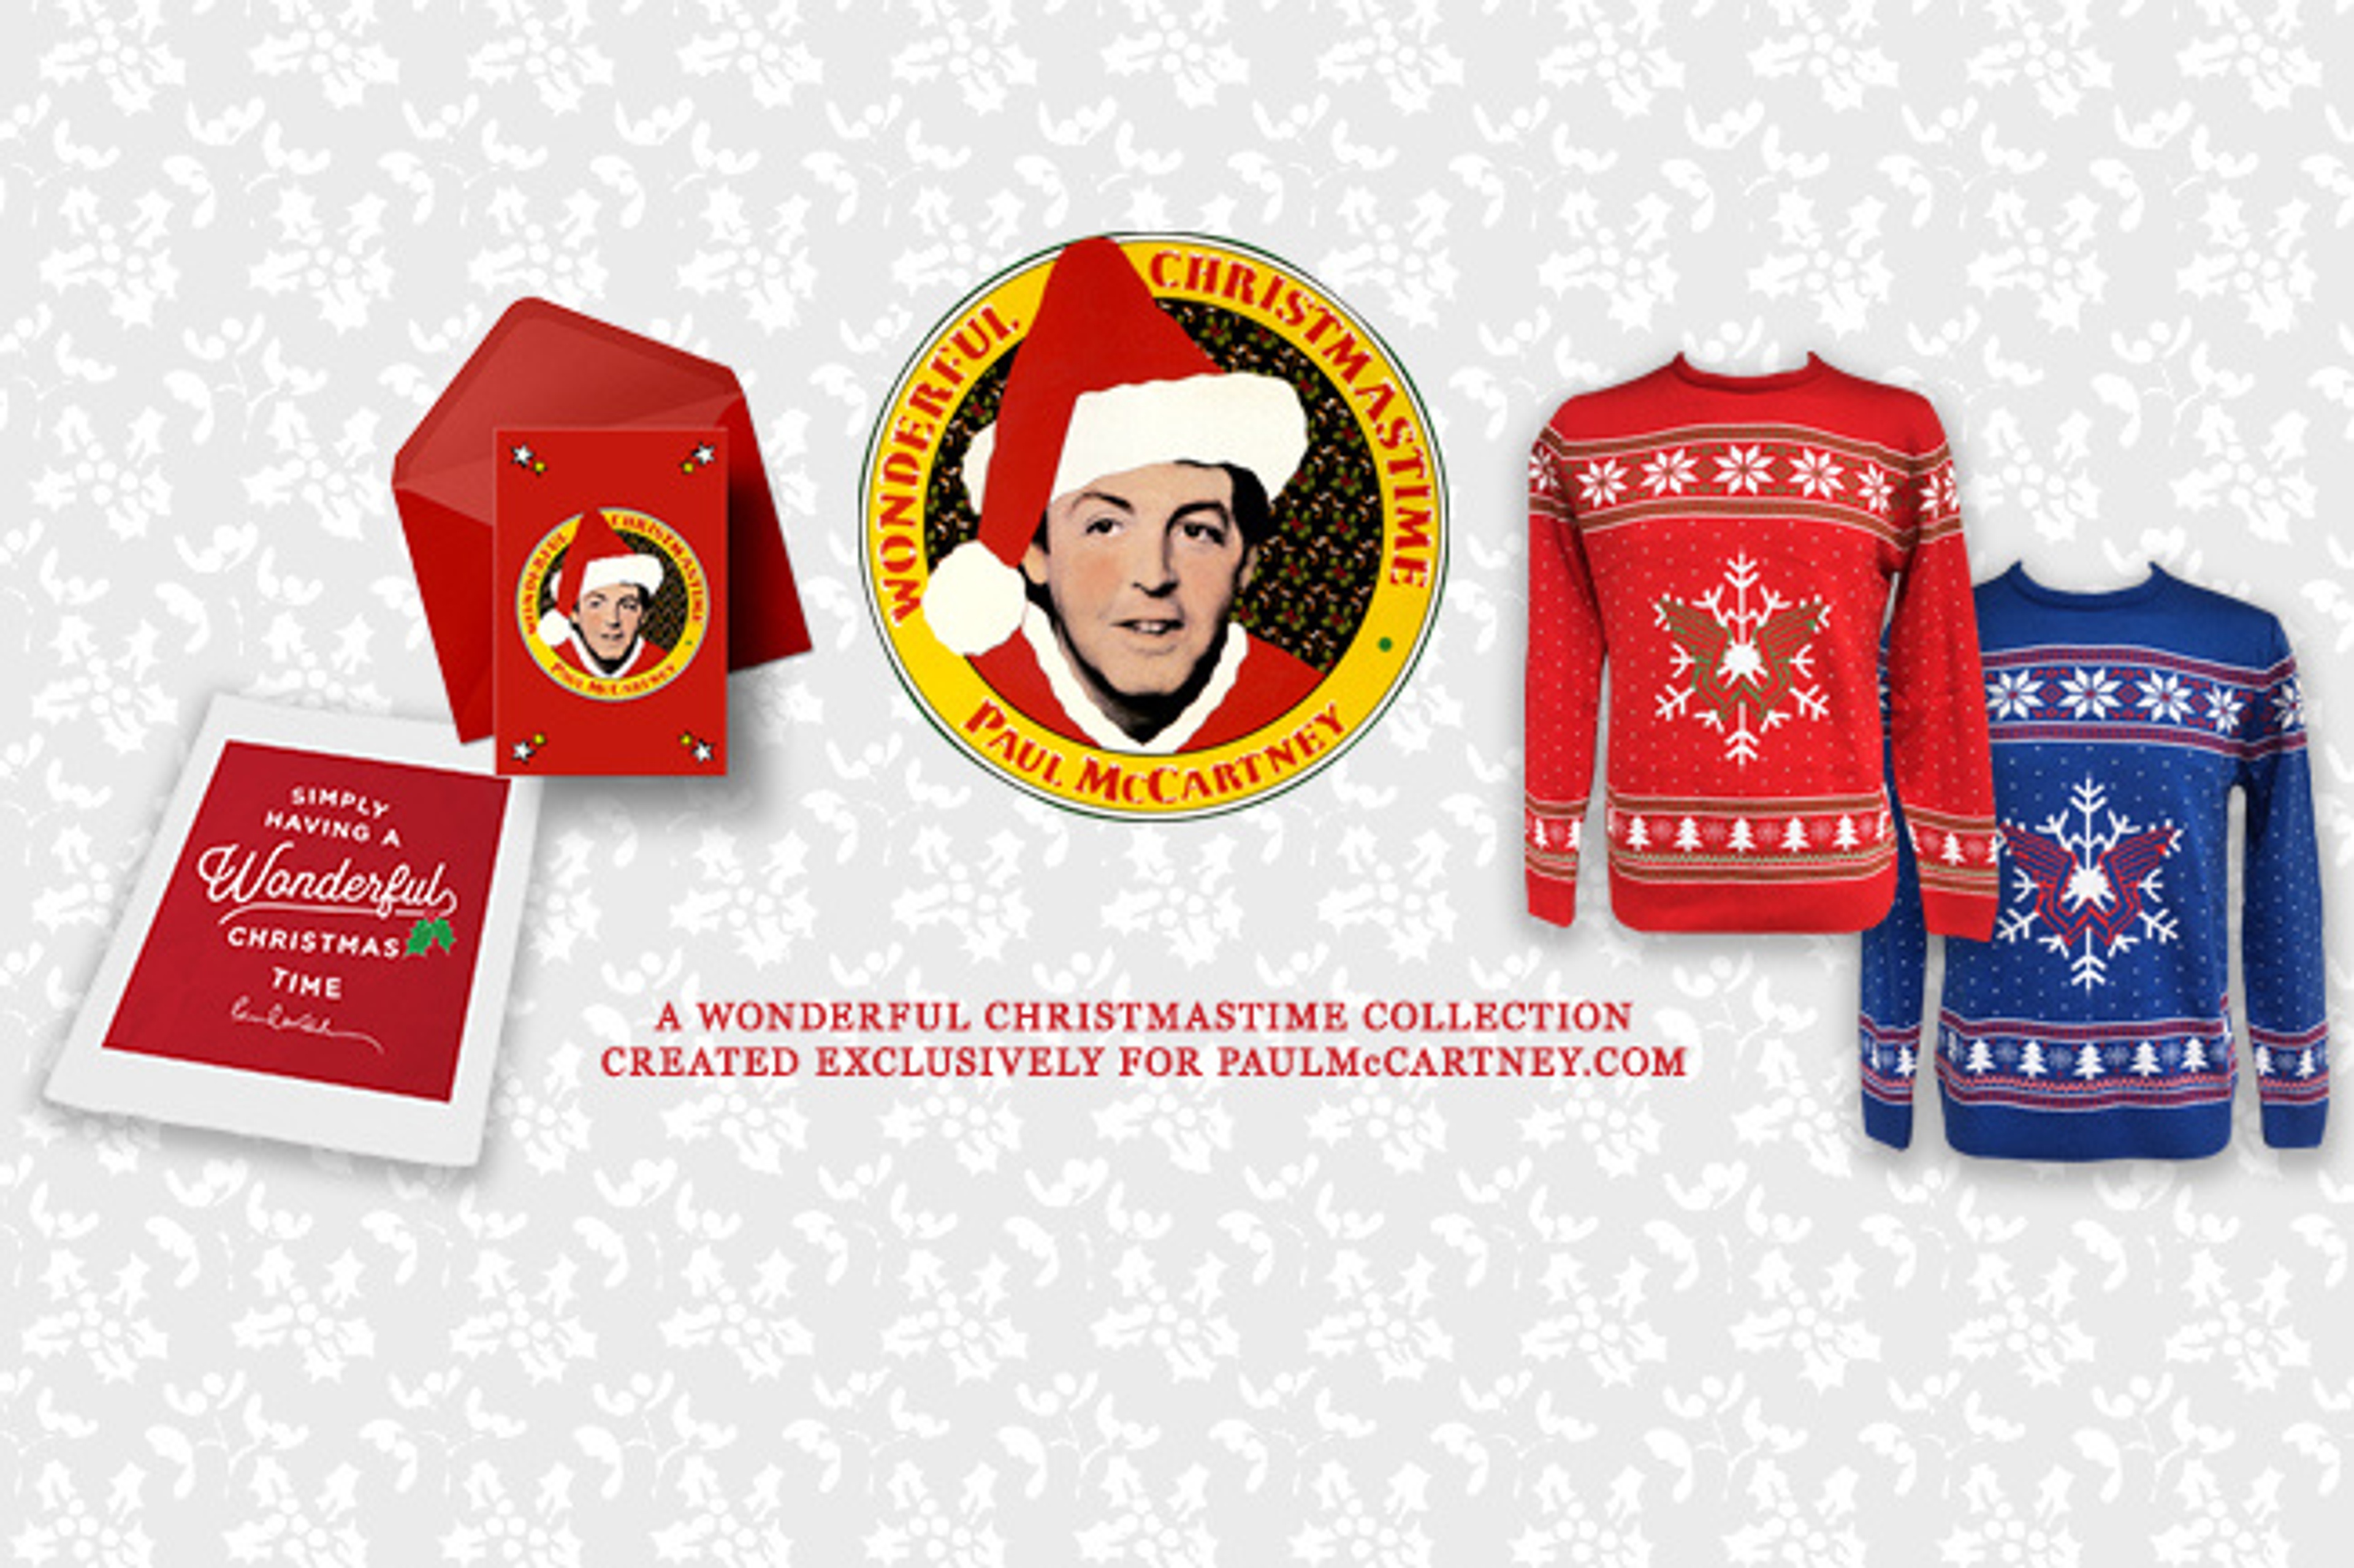 New 'Wonderful Christmastime' Merchandise